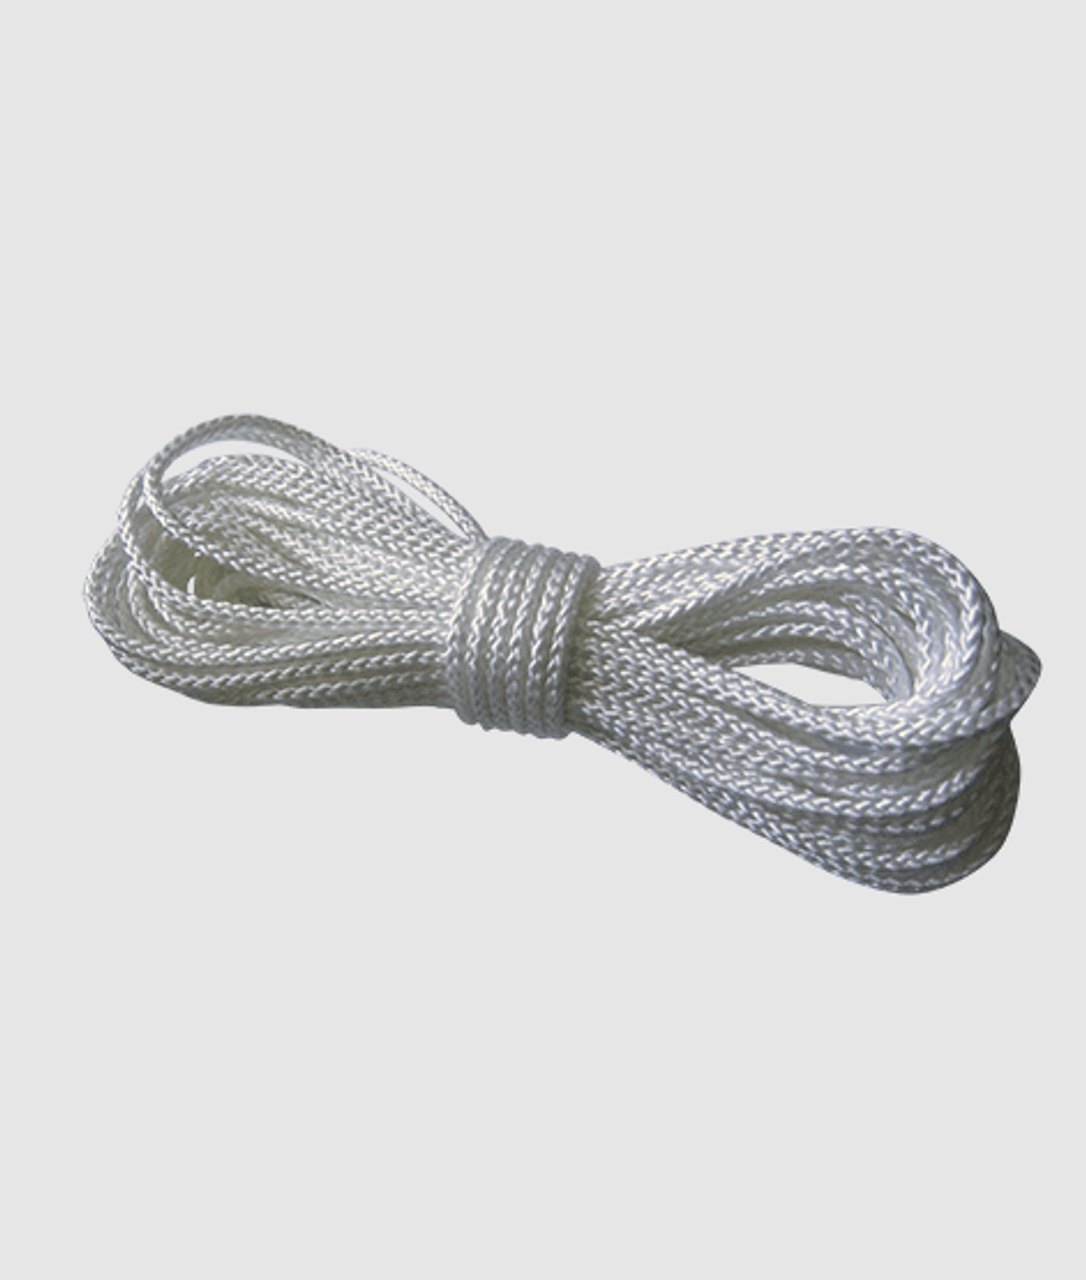 Nylon Rope (50 ft)